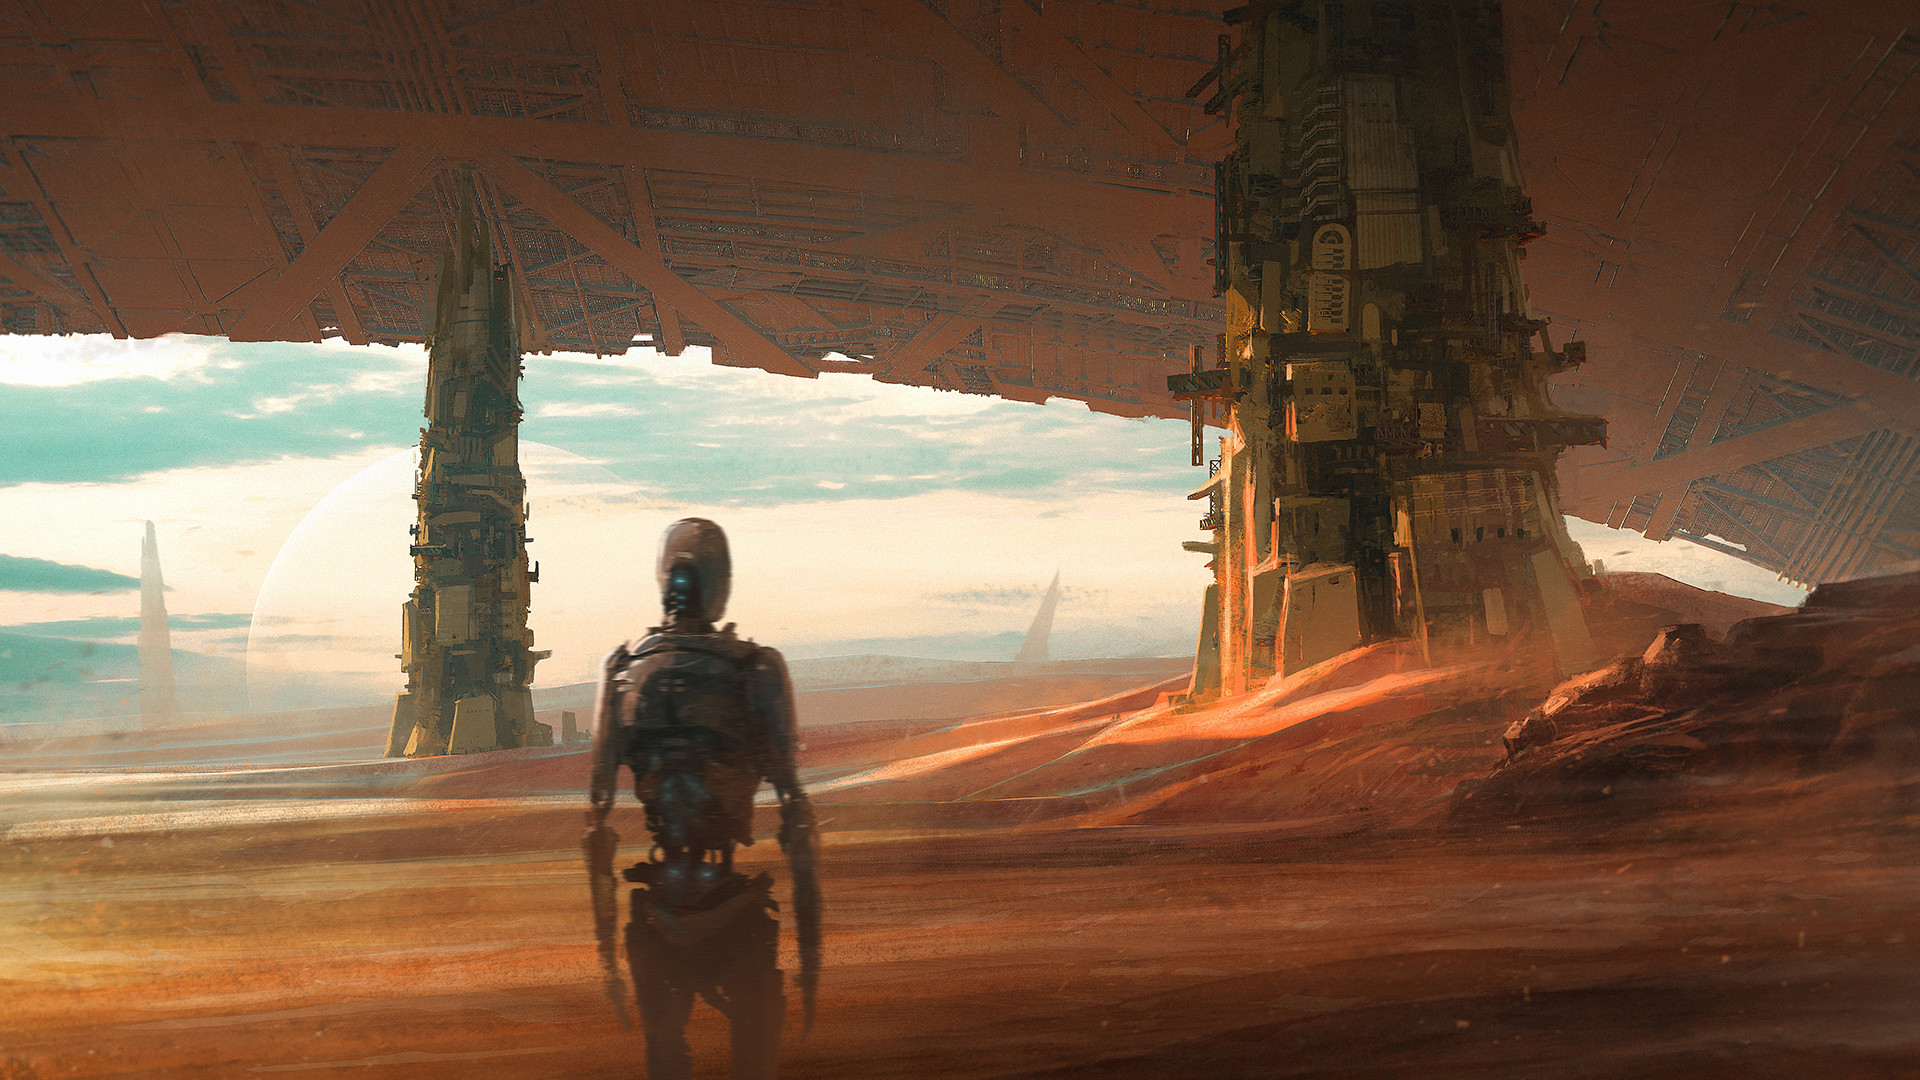 Sci-Fi храм в пустыне